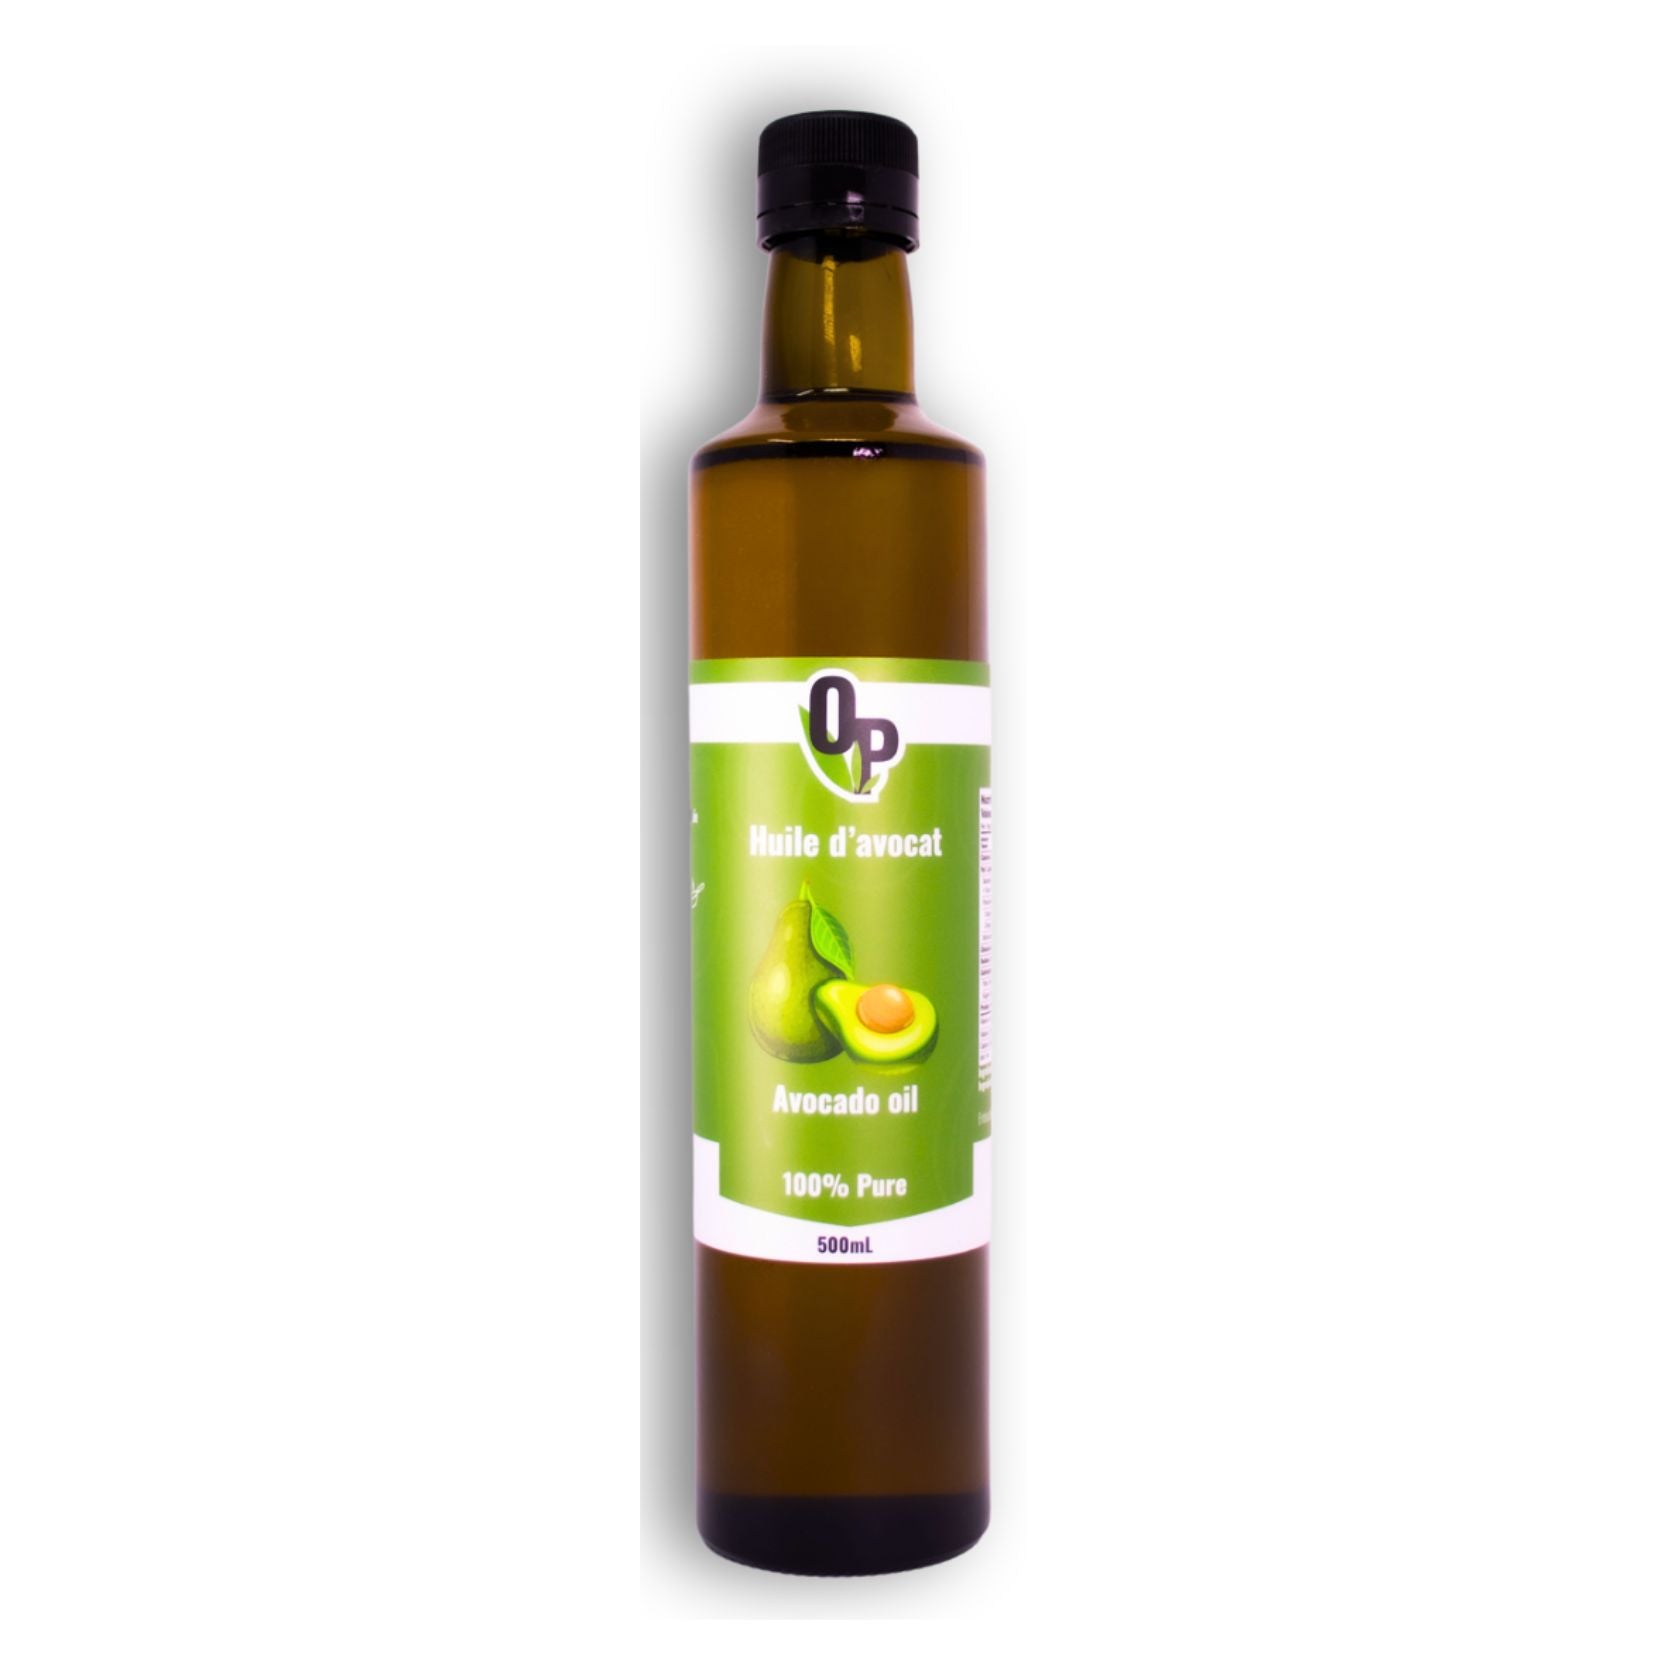 Avocado oil 